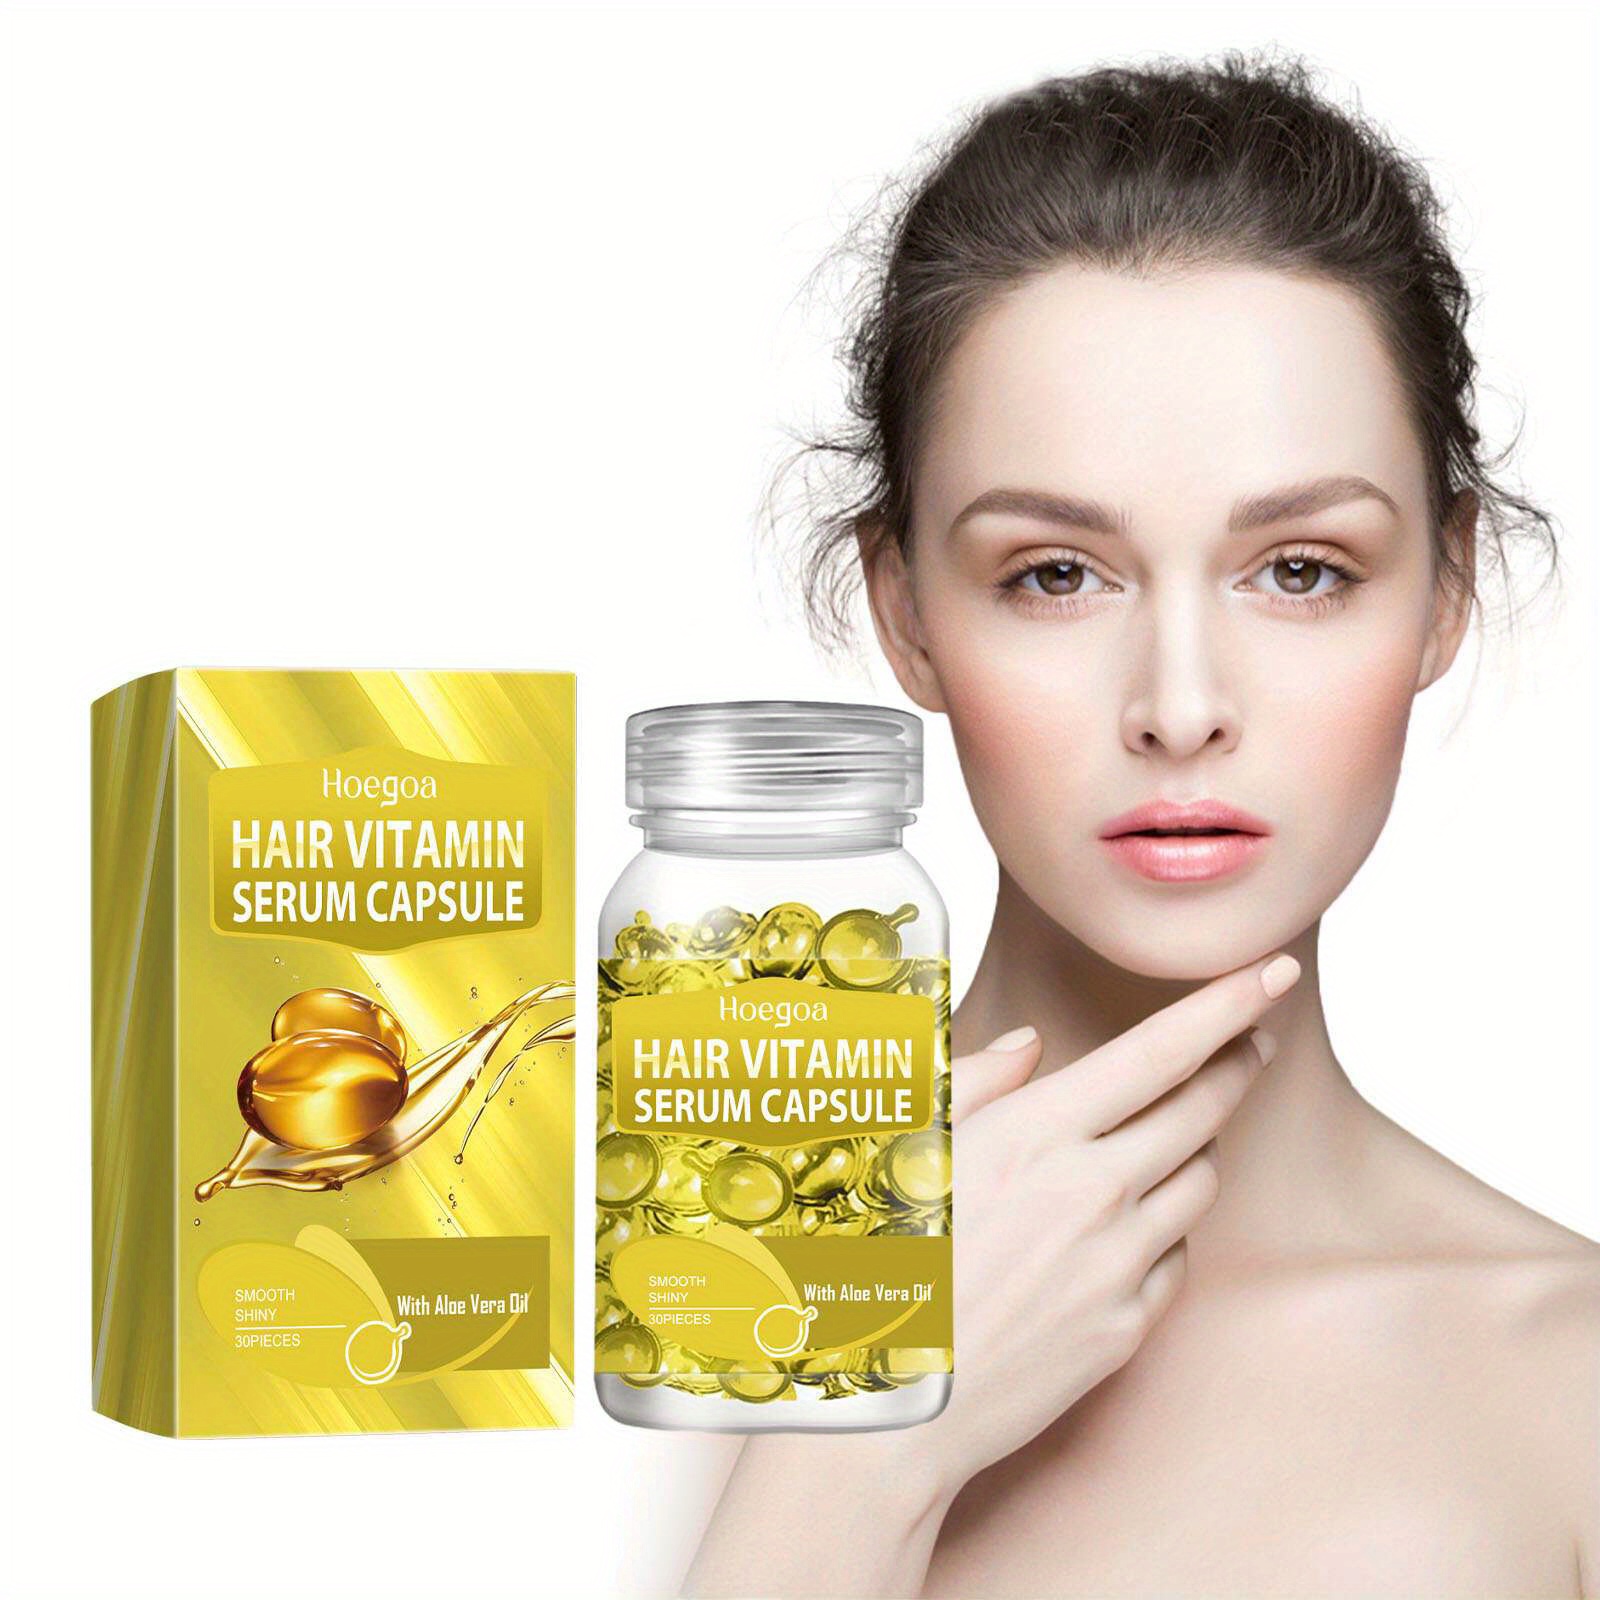 

30pcs/bottle Hair Vitamin Serum Capsule With Honey, Moroccan Oil, Vitamin C & E, Moisturizing Shine Enhancing For Soft, Glossy Hair Care